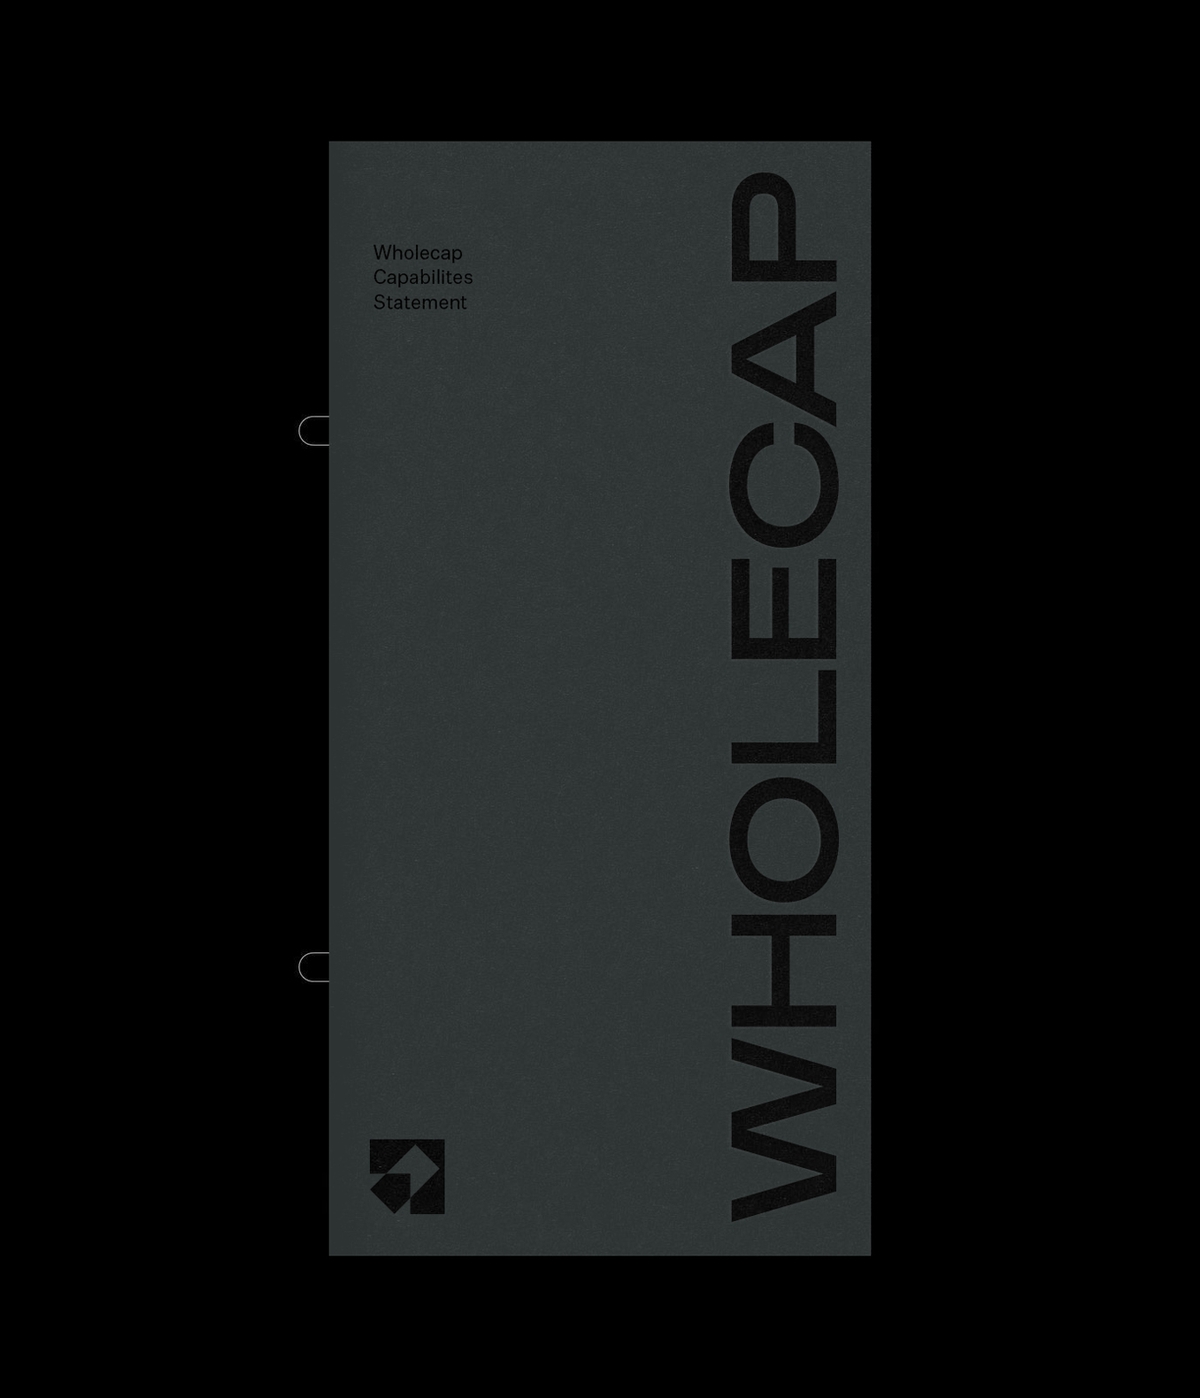 Wholecap - Brand and Website Design - Financial Capital Raising Document Cover | Atollon - a design company